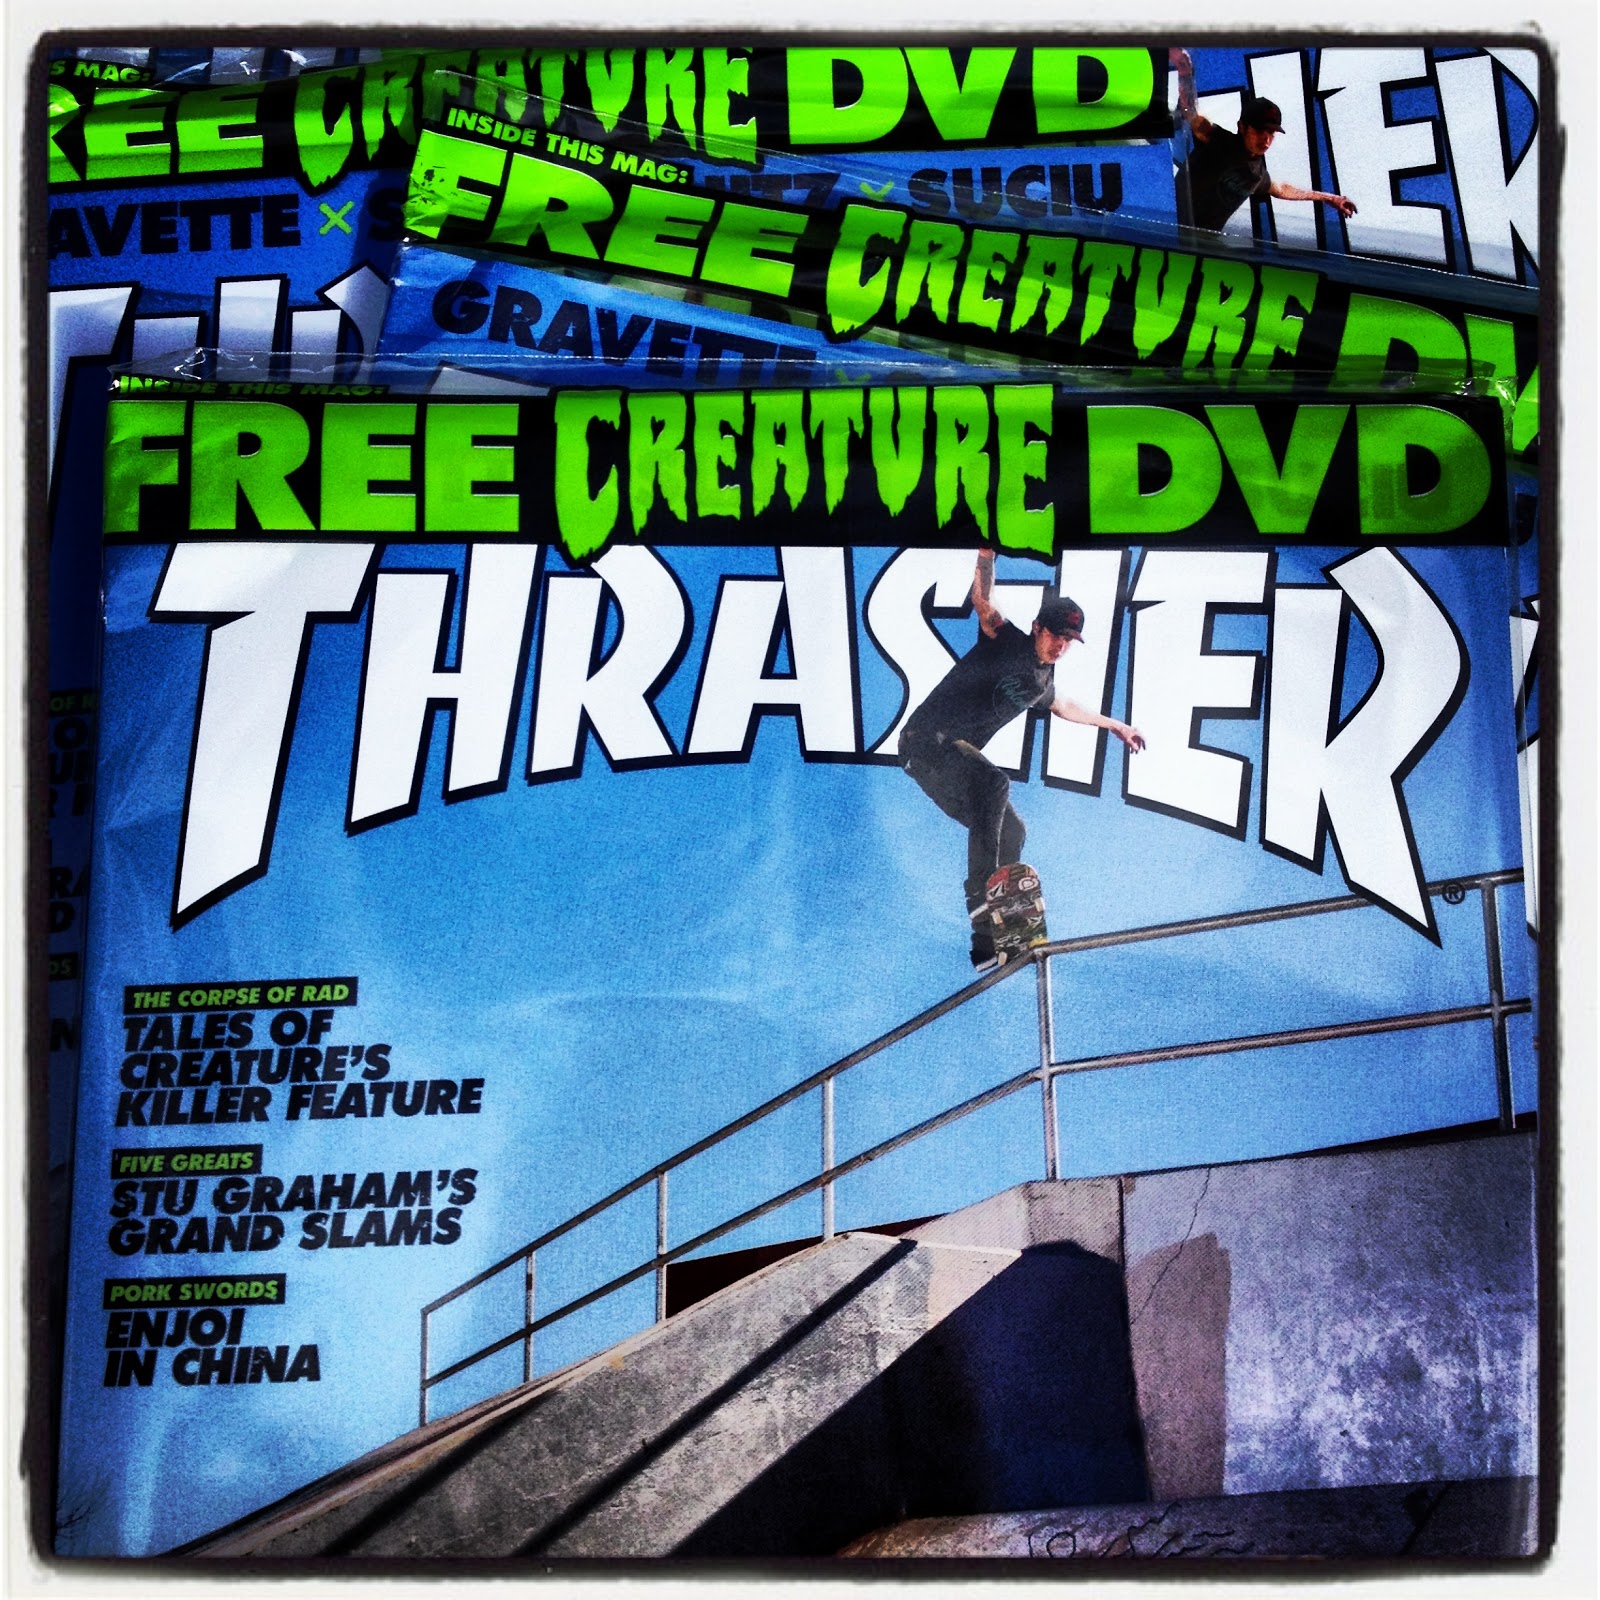 Triumferende Konvention Mistillid Prime Skate Shop: New Thrasher Mag with Free Creature DVD in